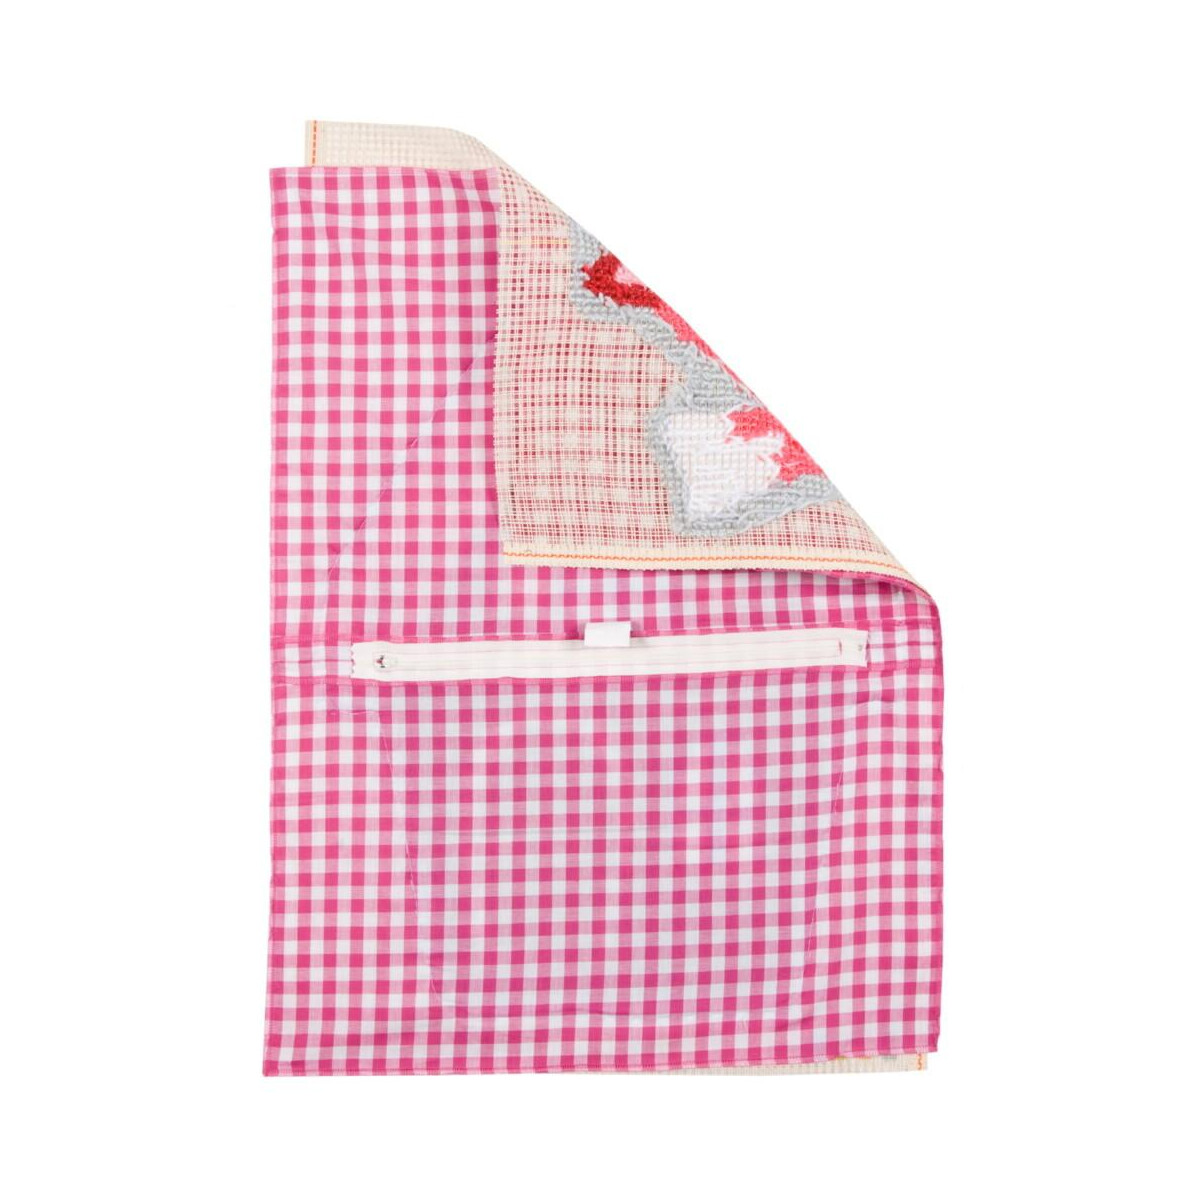 Vervaco cushion back with zipper, red, 45x62 cm , DIY